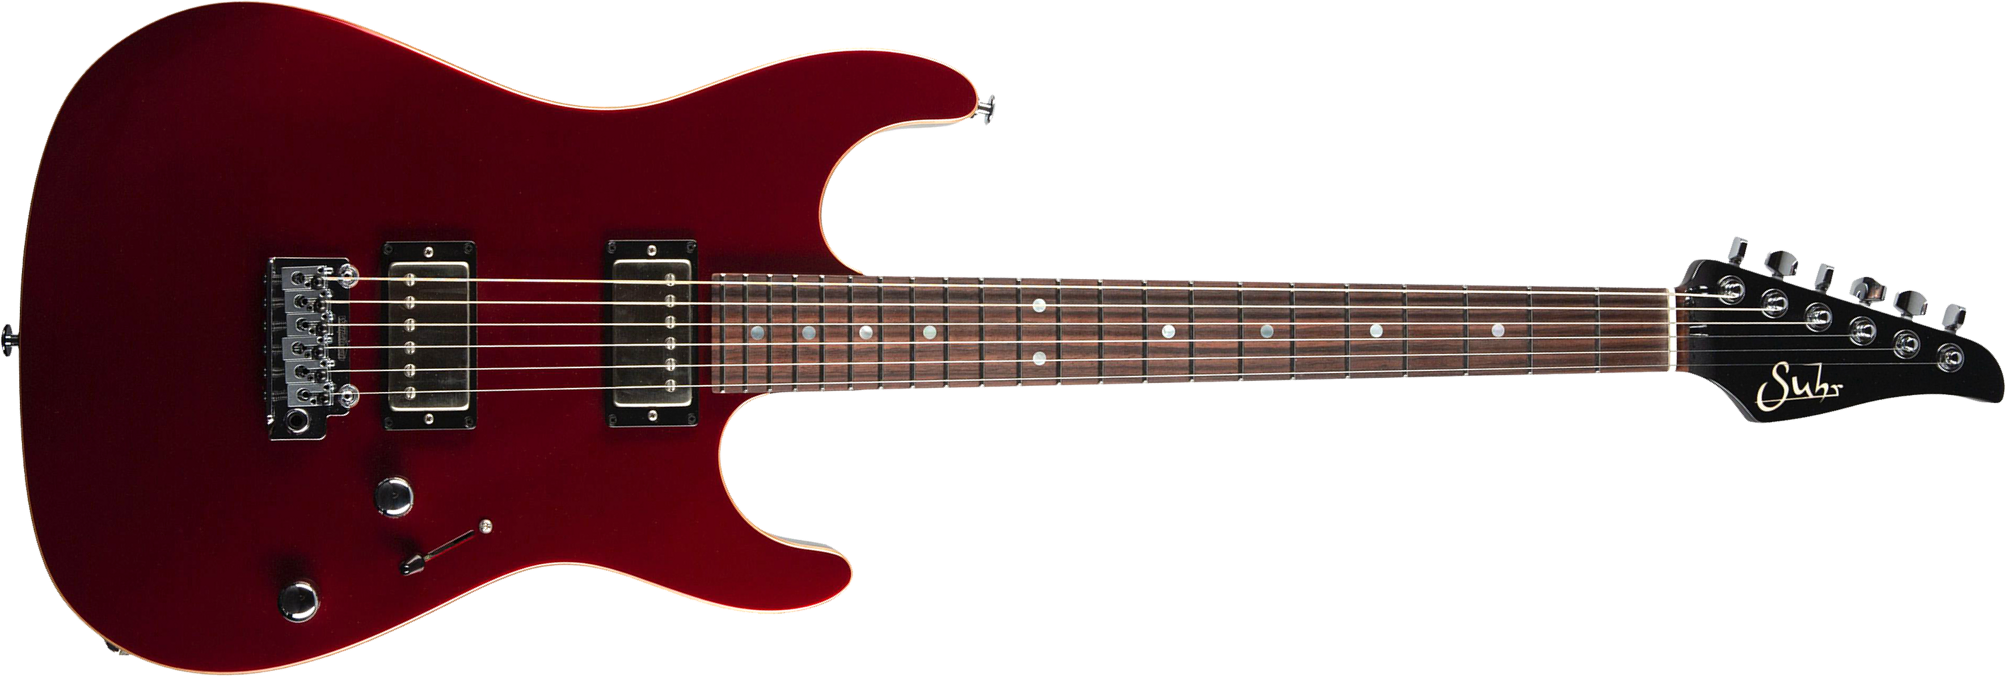 Suhr Pete Thorn Standard 01-sig-0029 Signature 2h Trem Rw - Garnet Red - Str shape electric guitar - Main picture